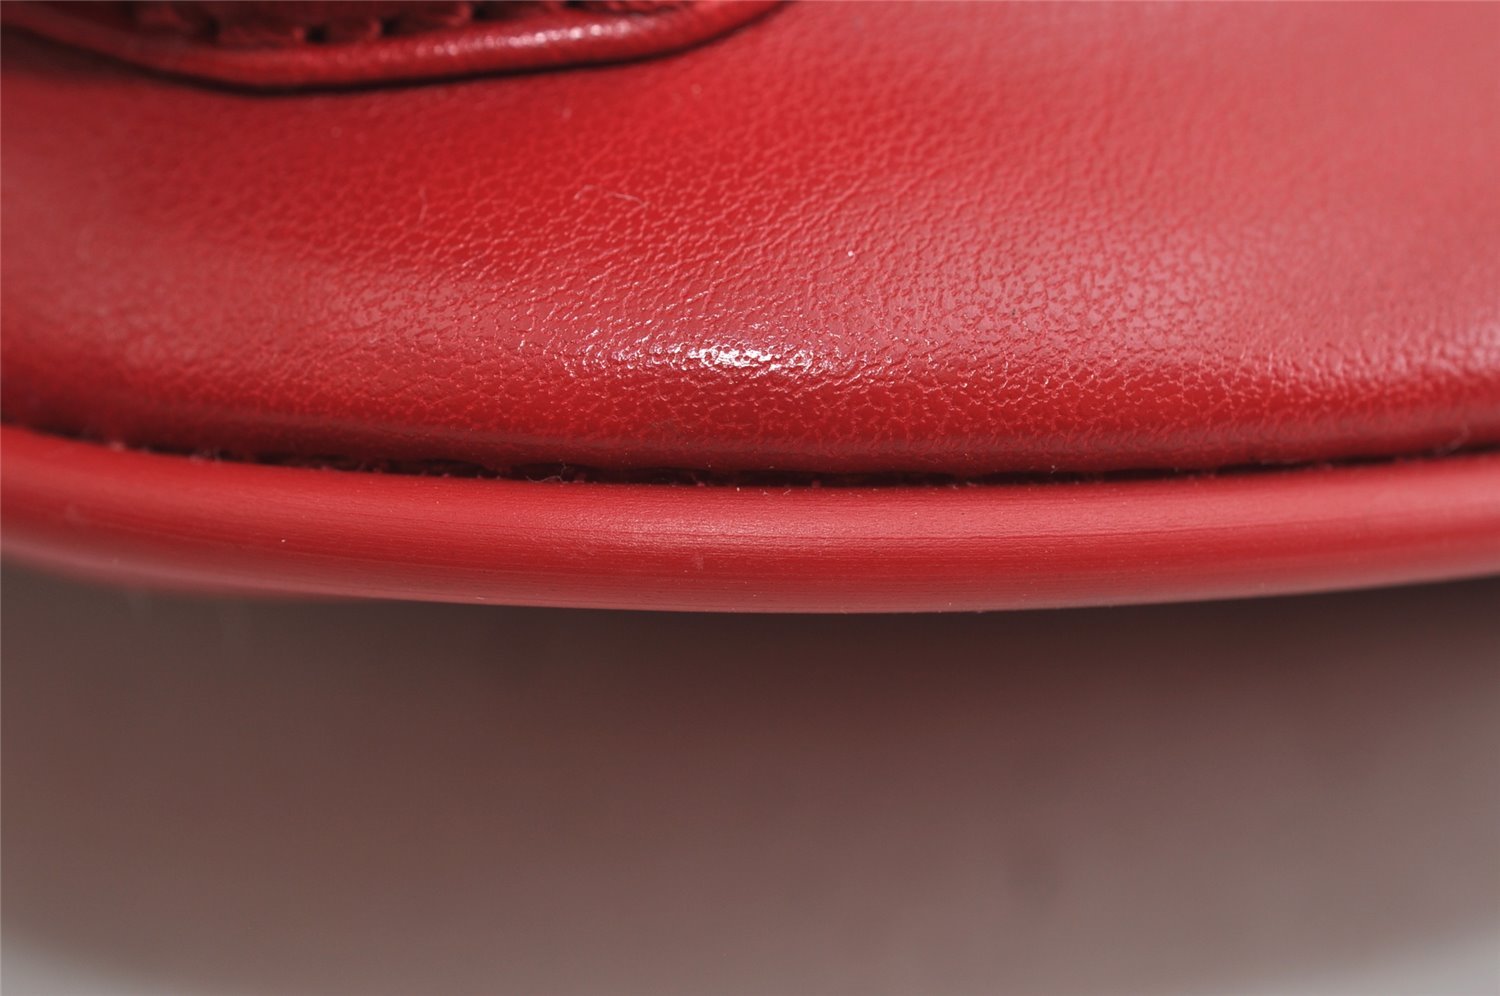 Authentic LACOSTE x SUPREME Imitation Leather Waist Bum Bag Purse Red 5839I